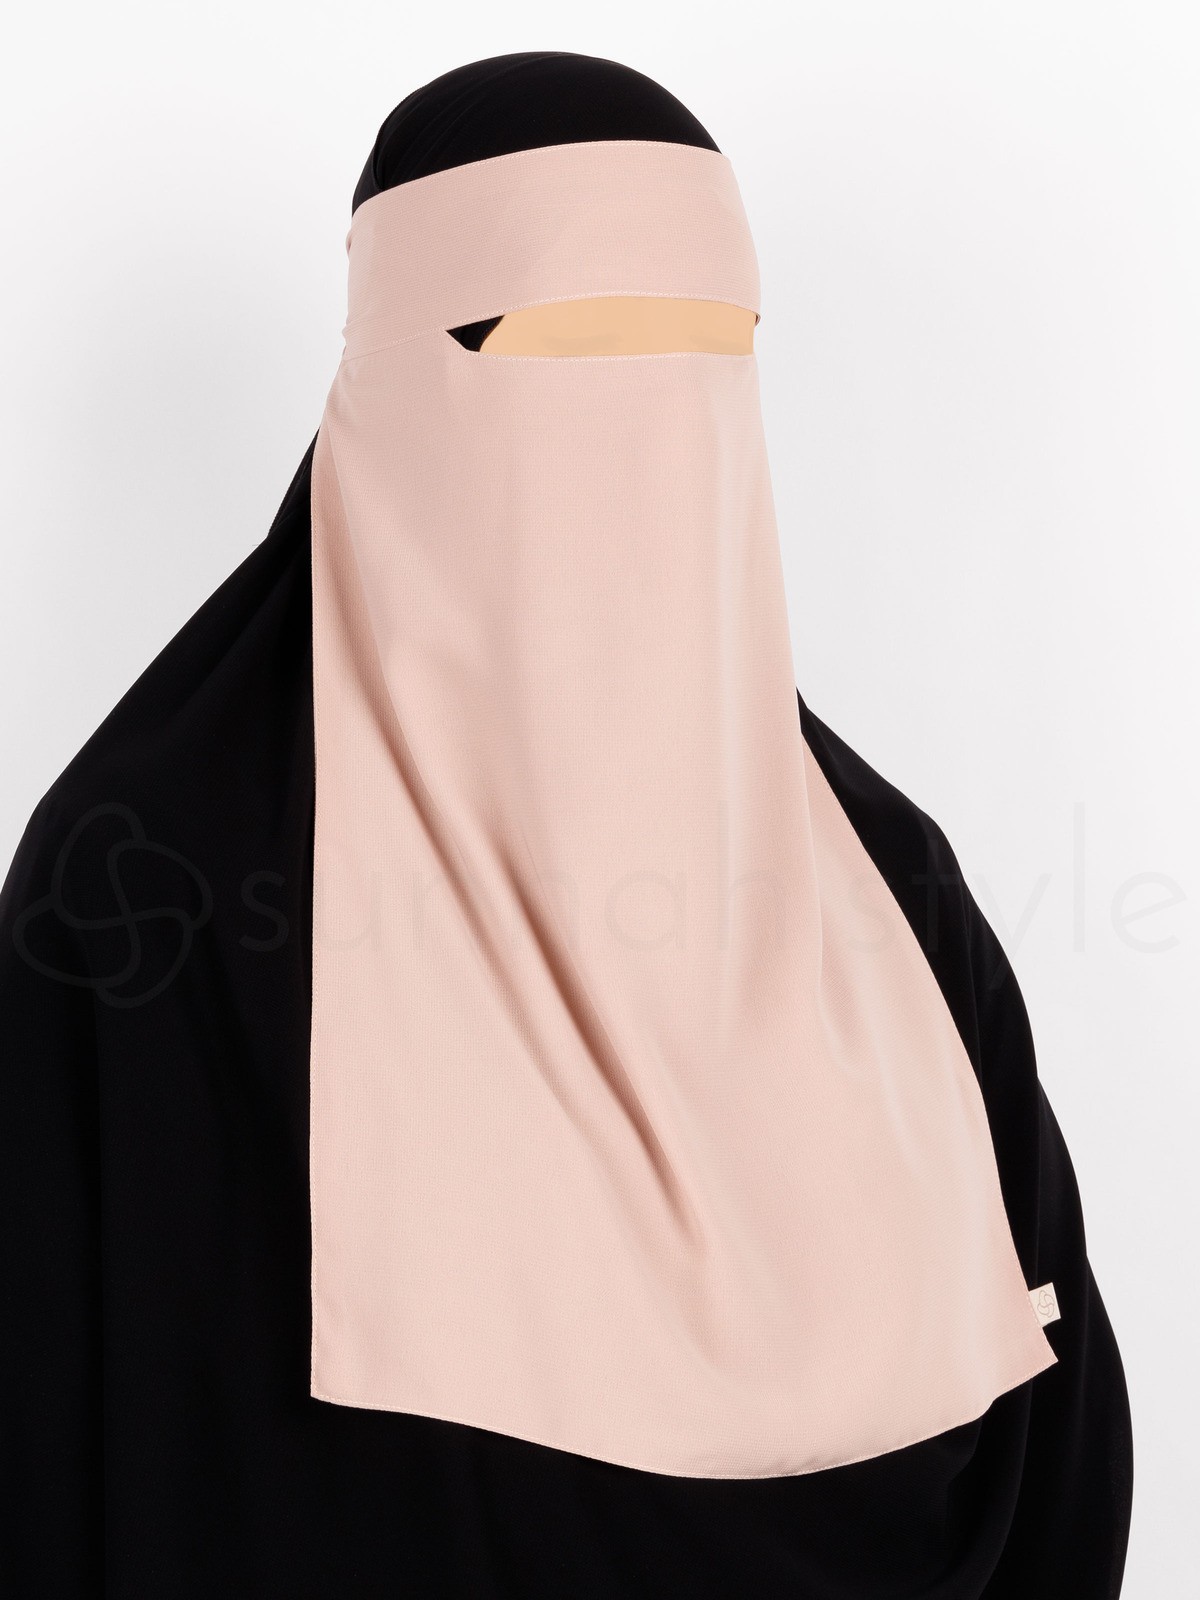 Sunnah Style - Narrow No-Pinch One Layer Niqab (Parfait)